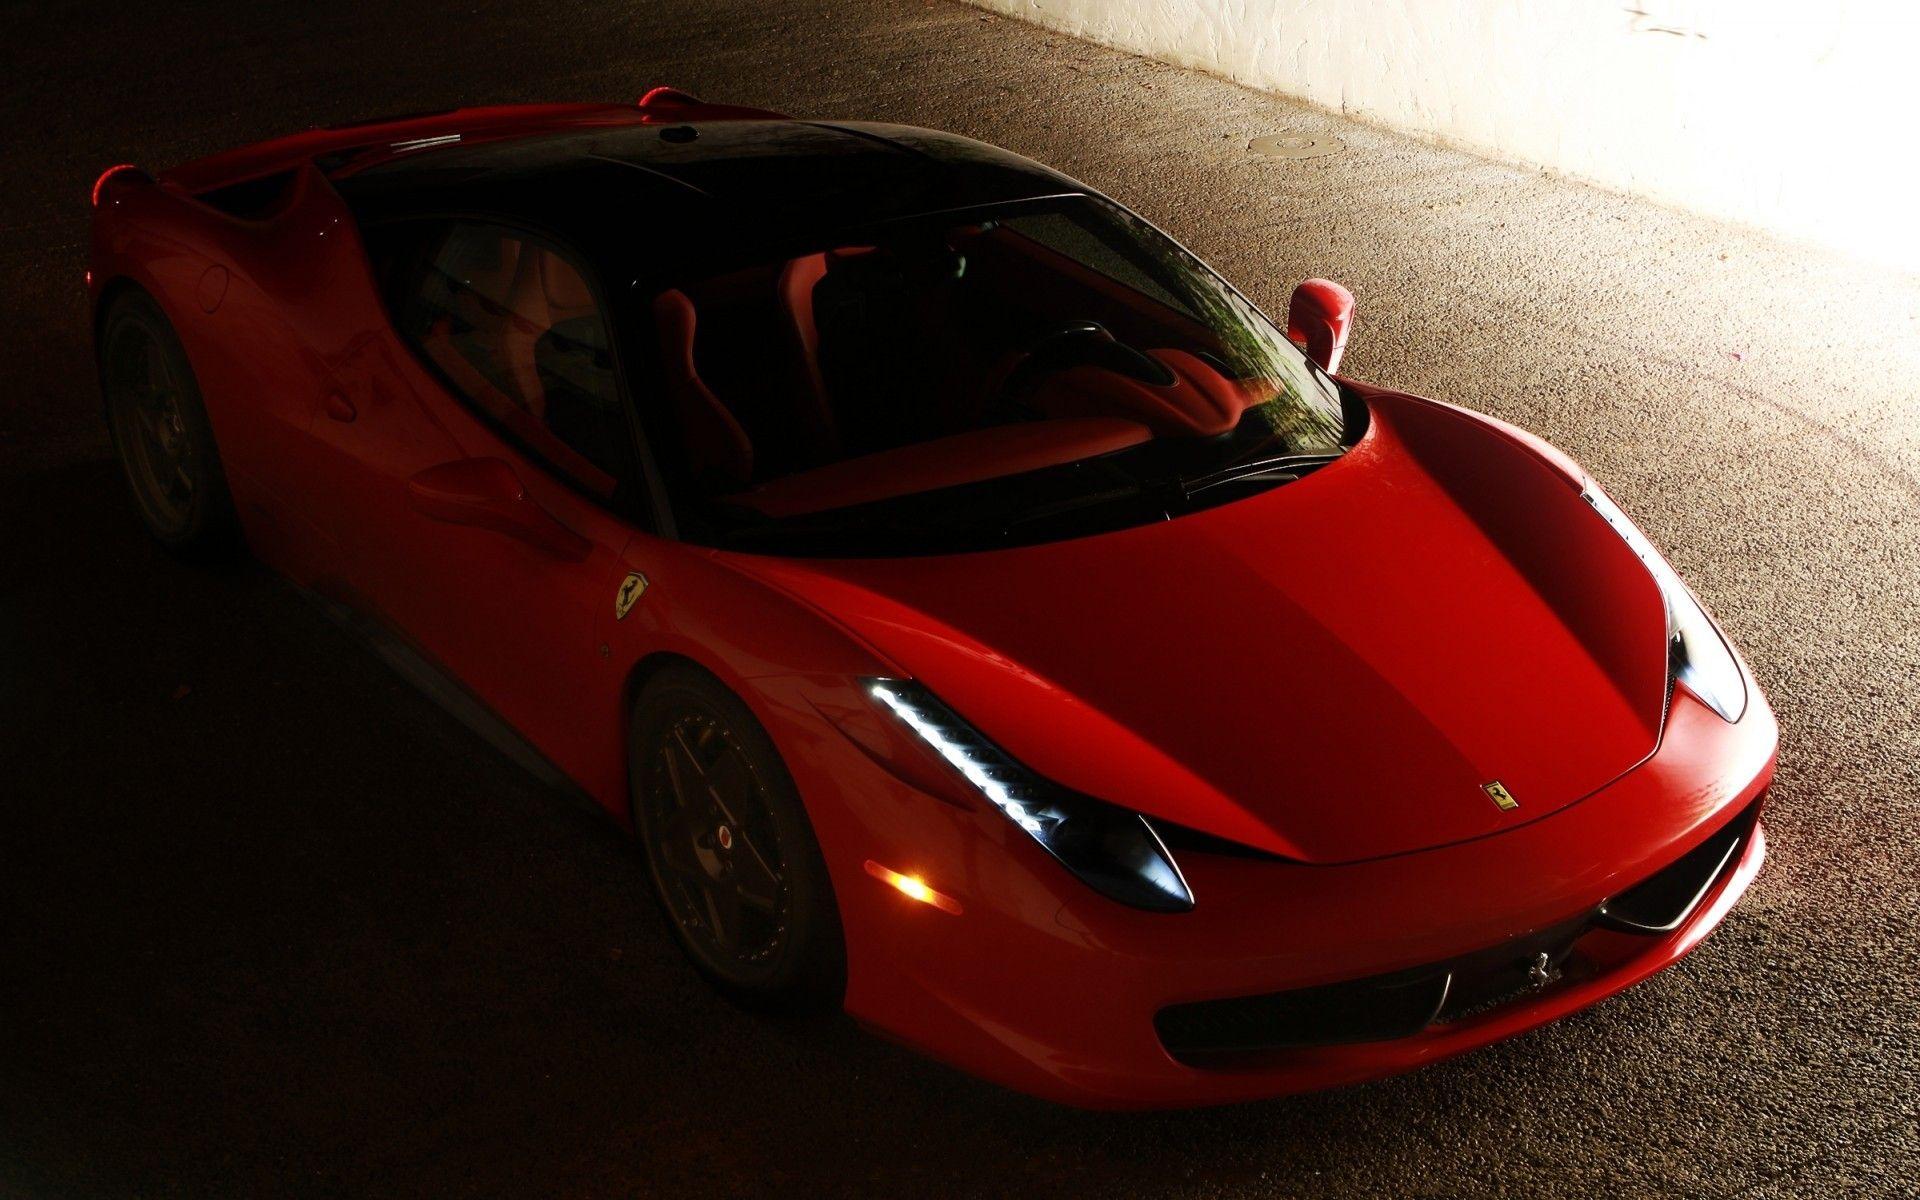 Red Ferrari Car Image Gallery